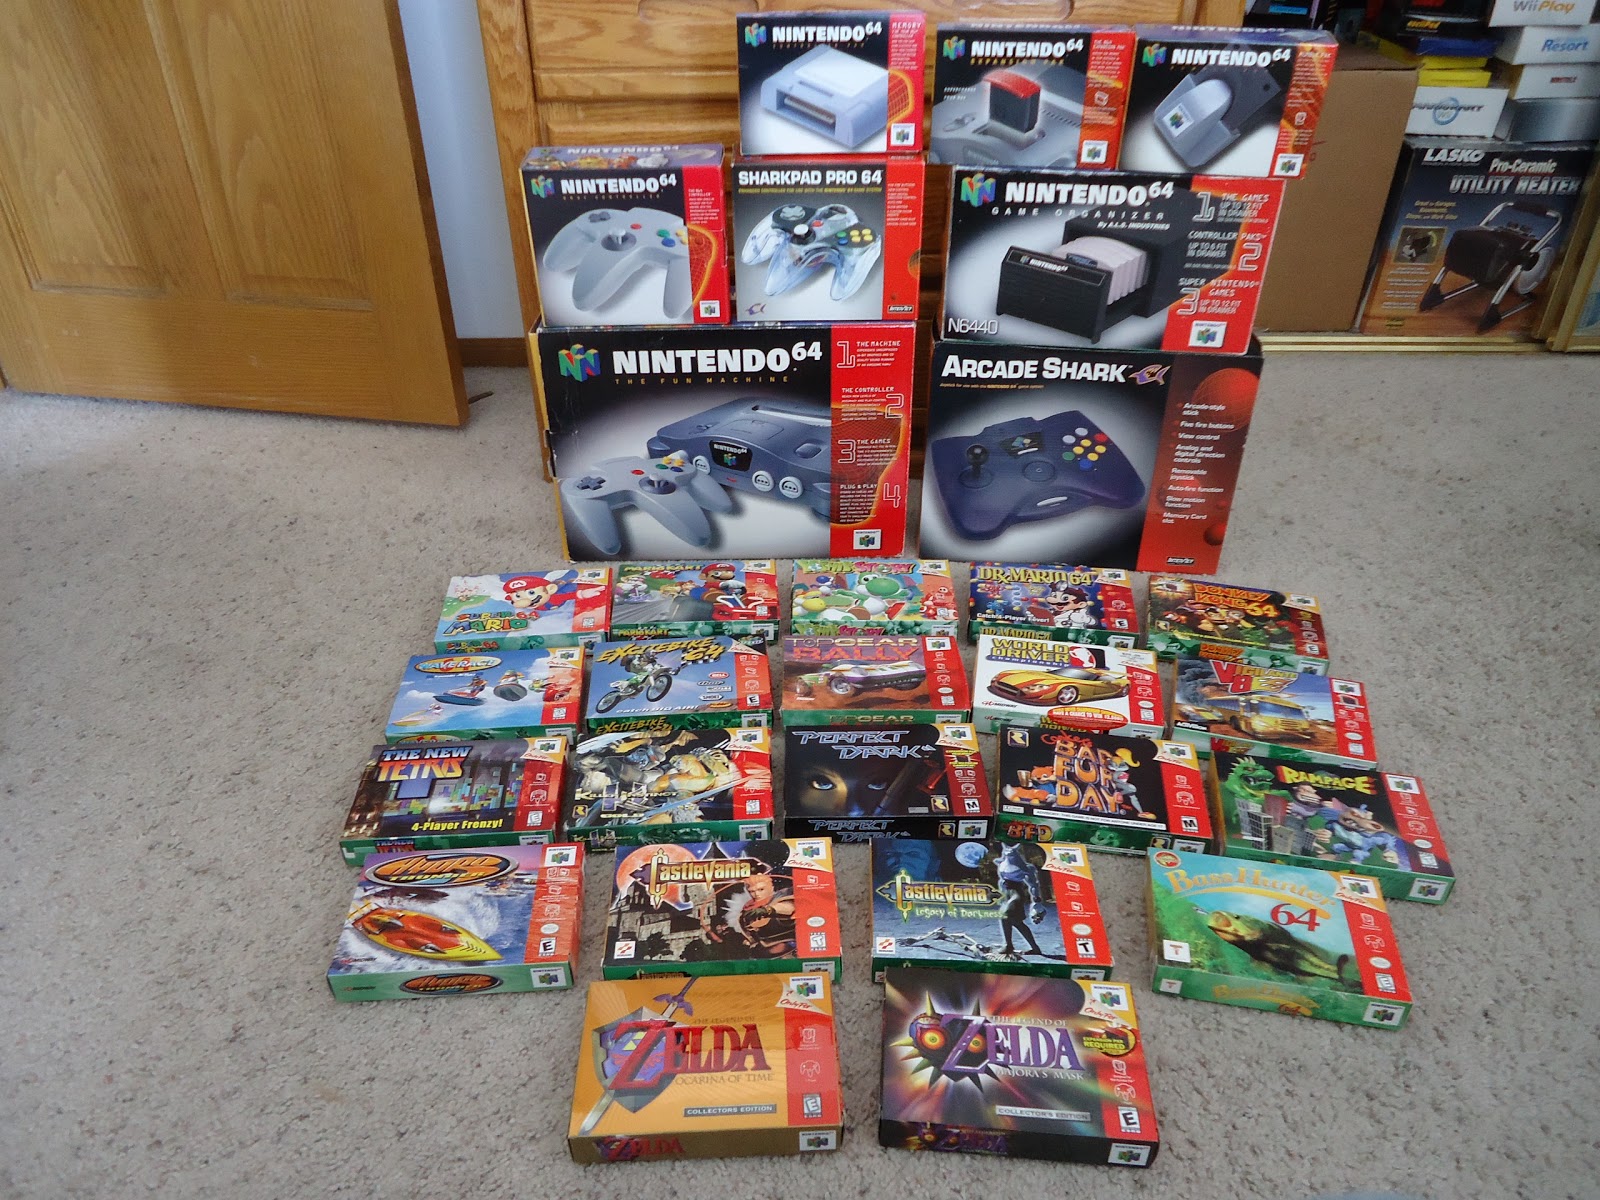 WatchmeplayNintendo: My Nintendo 64 Collection